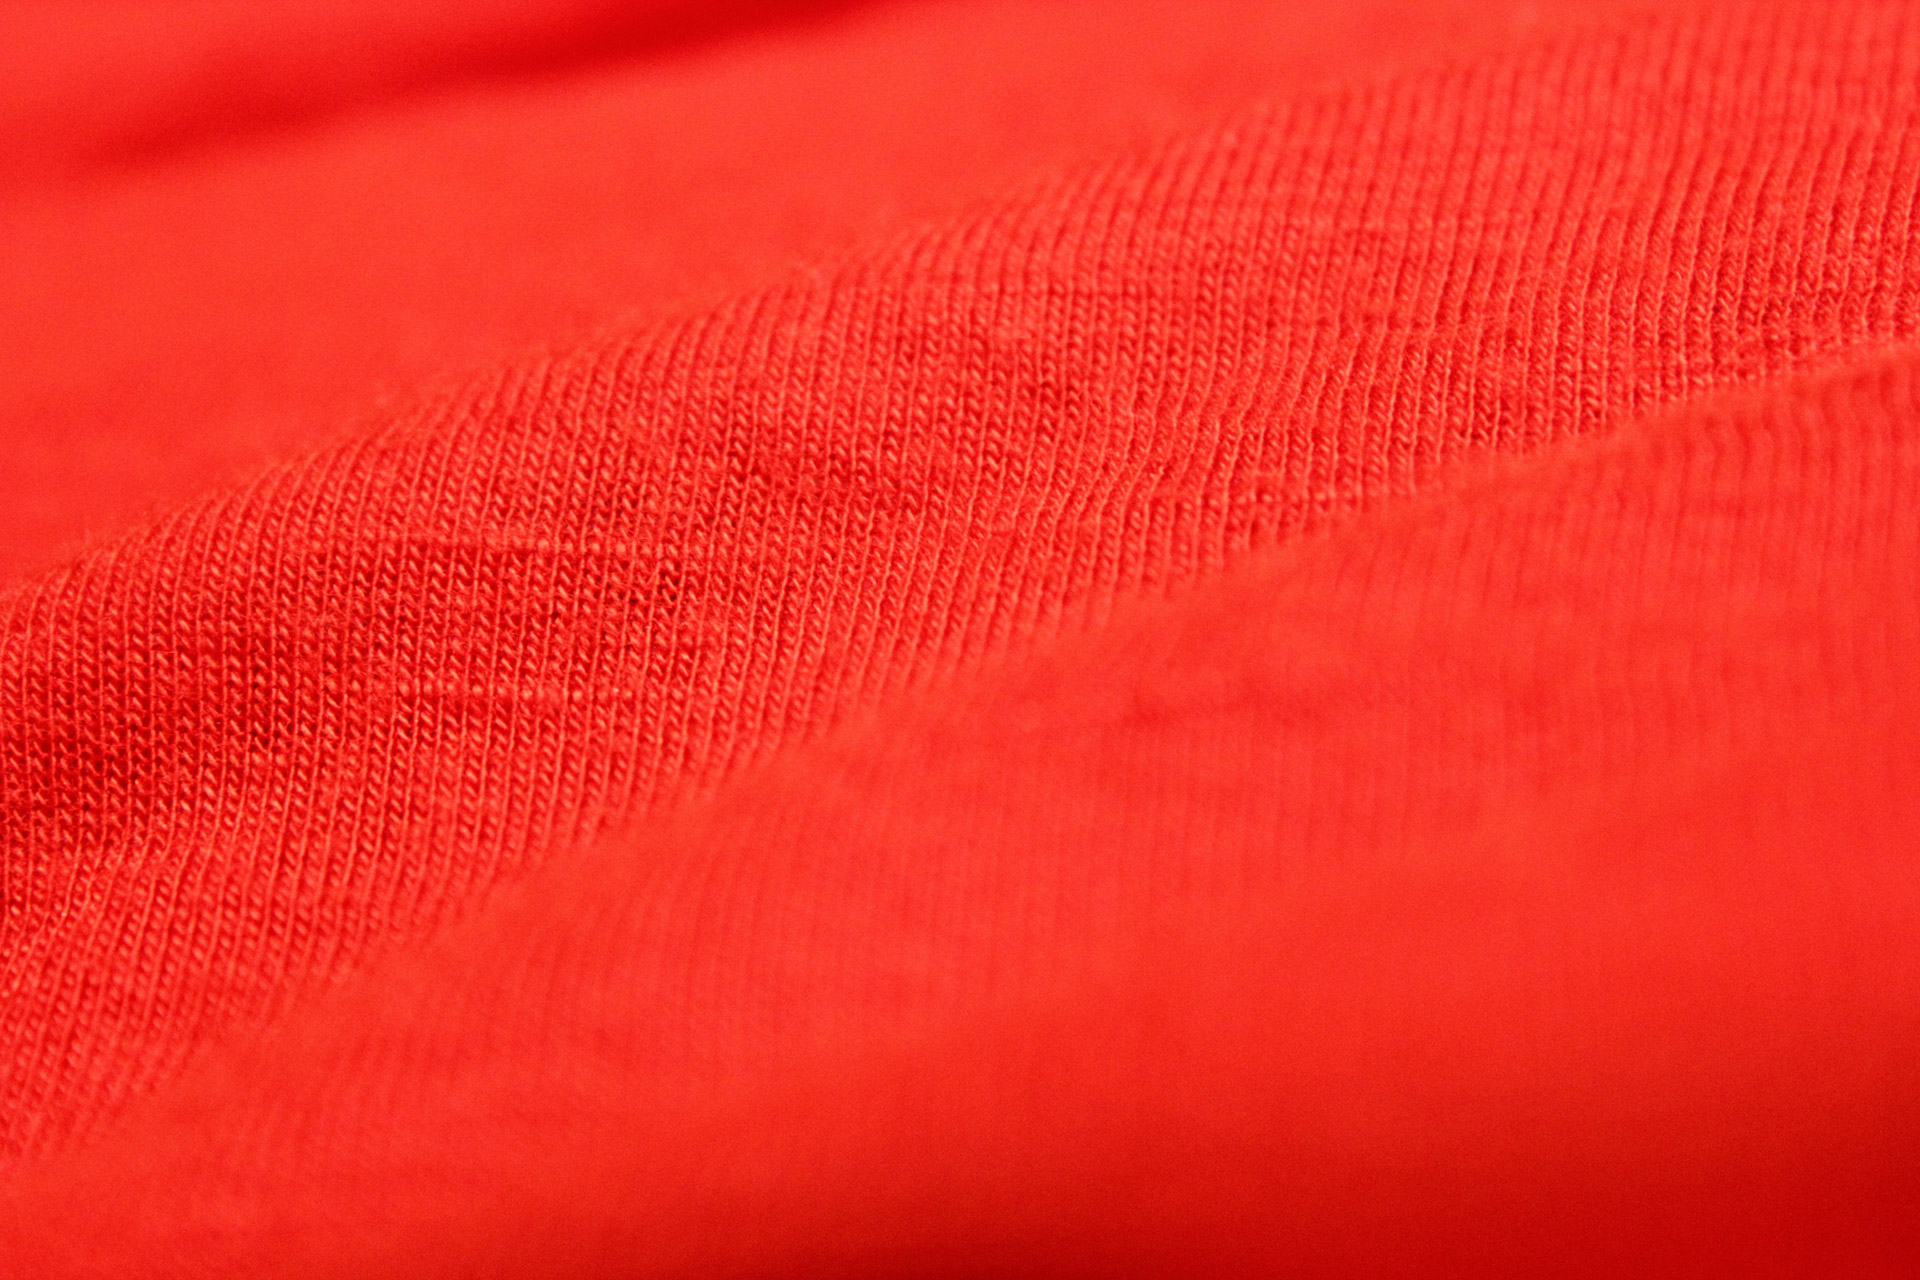 Кумач вый ситц вый. Красная ткань. Красное полотно ткани. Фон ткань. Алая ткань.